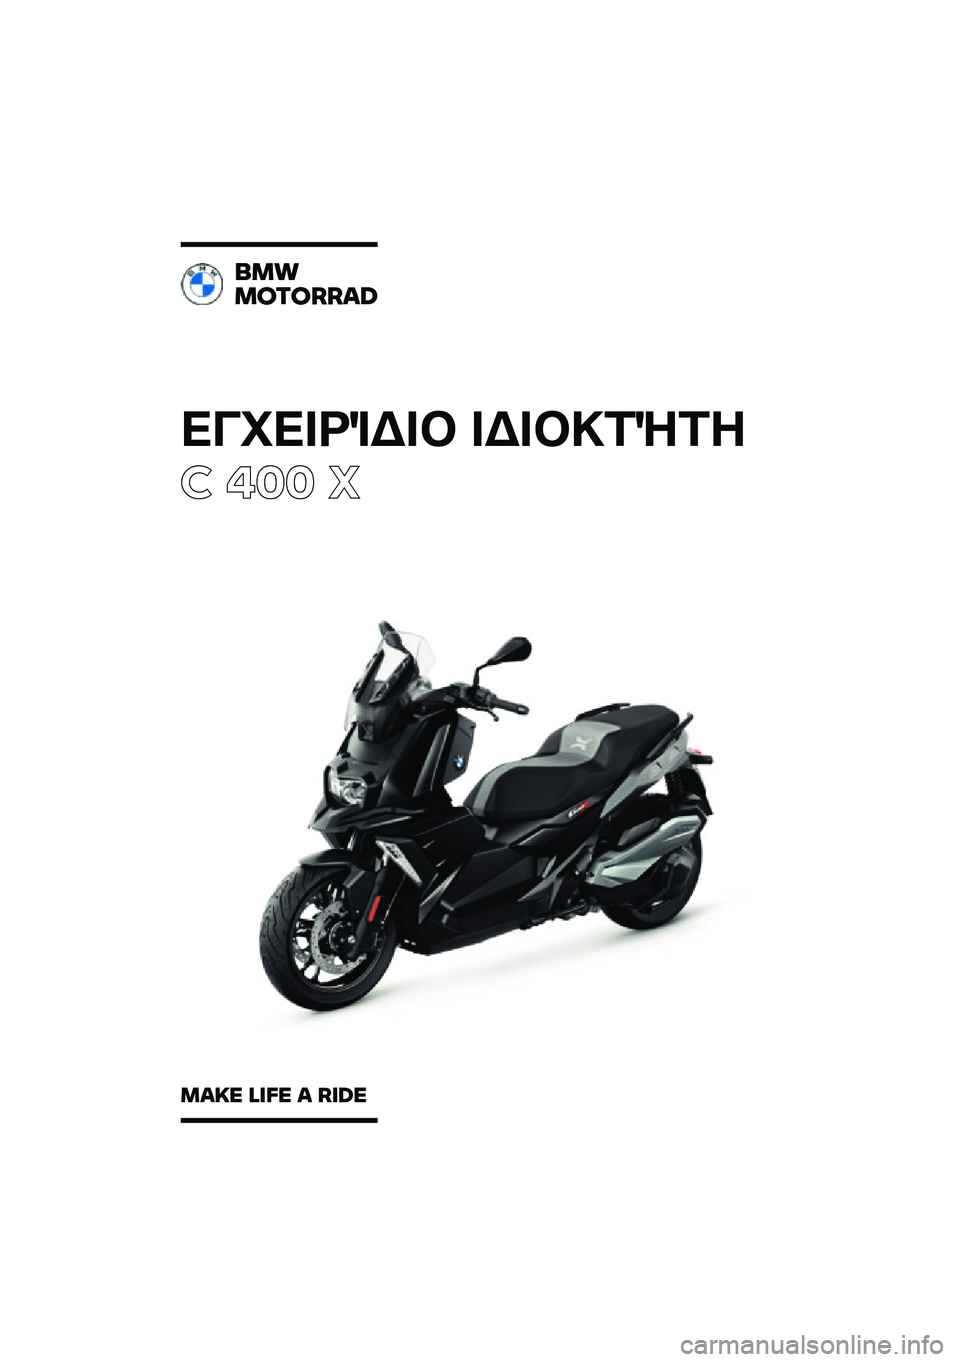 BMW MOTORRAD C 400 X 2021  Εγχειρίδιο ιδιοκτήτη (in Greek) ��������\b��	 ��\b��	�
��\f��
� ��� �
���
�������\b�	
��\b�
� �\f�
�� �\b ��
�	� 